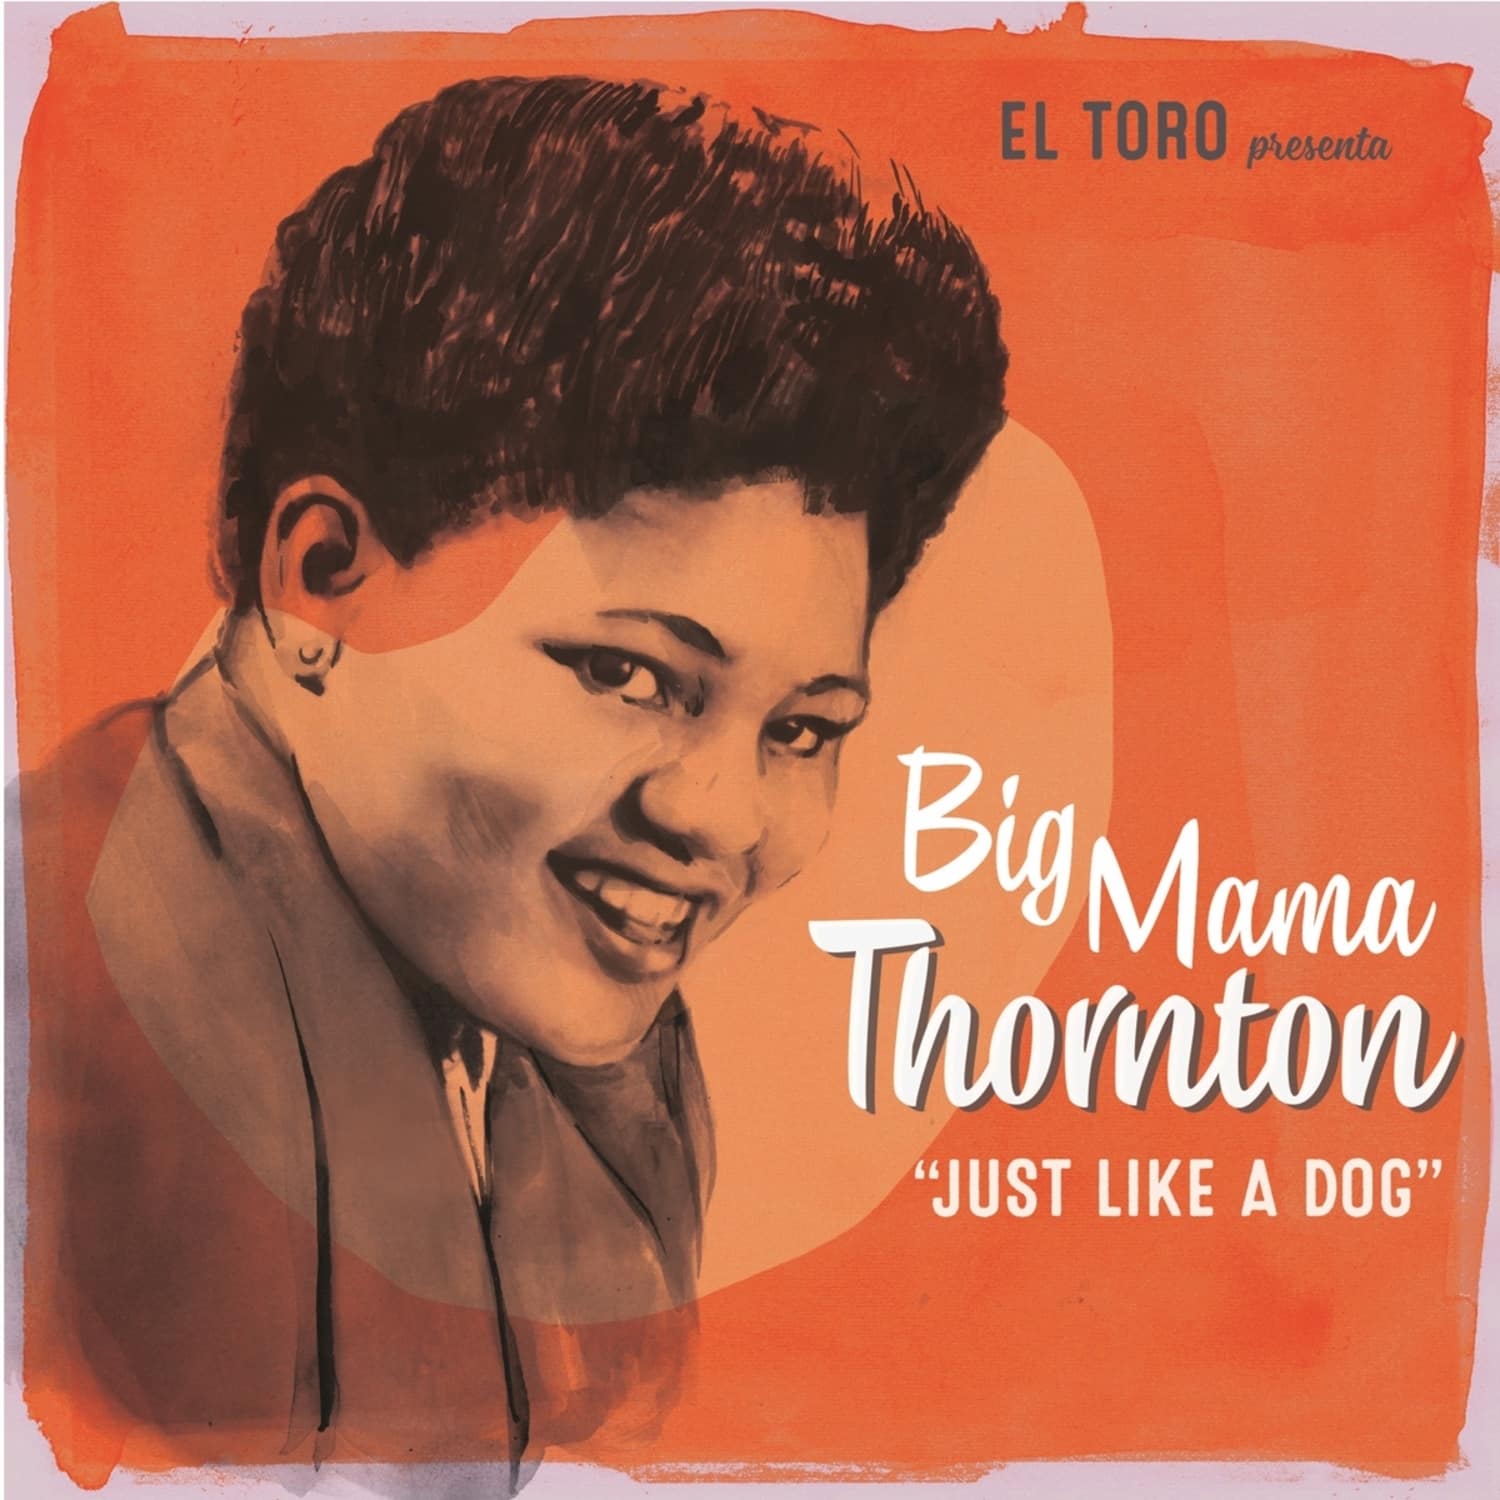  Big Mama Thornton - JUST LIKE A DOG EP 